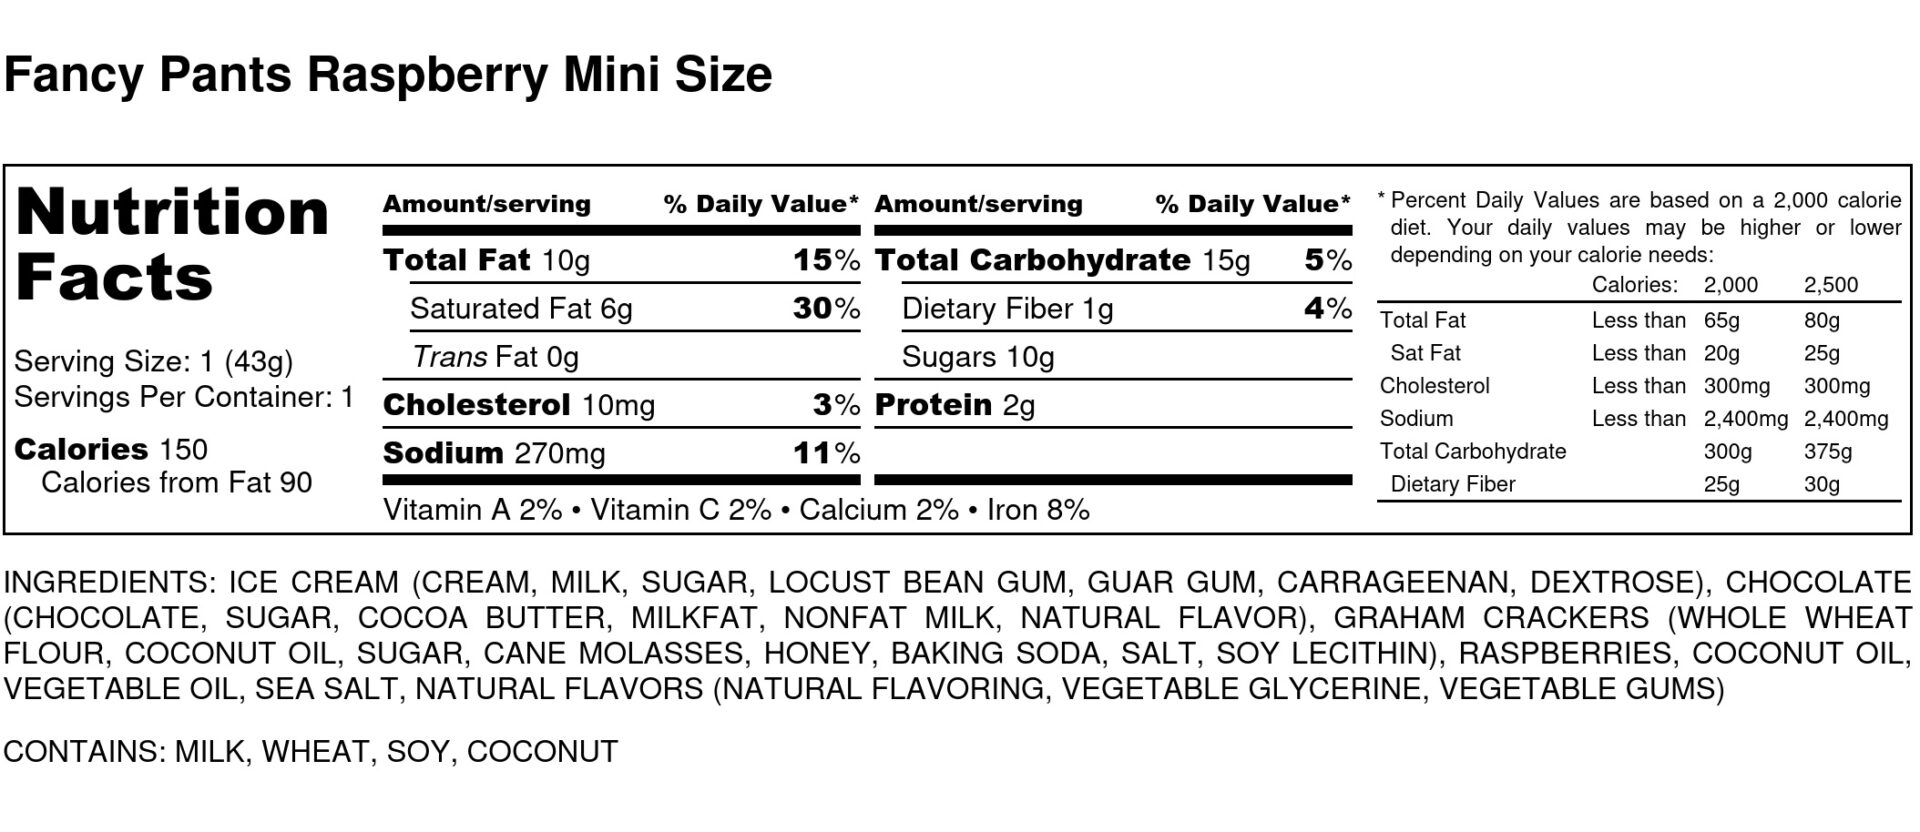 Fancy Pants Raspberry Mini Size Nutrition Label scaled